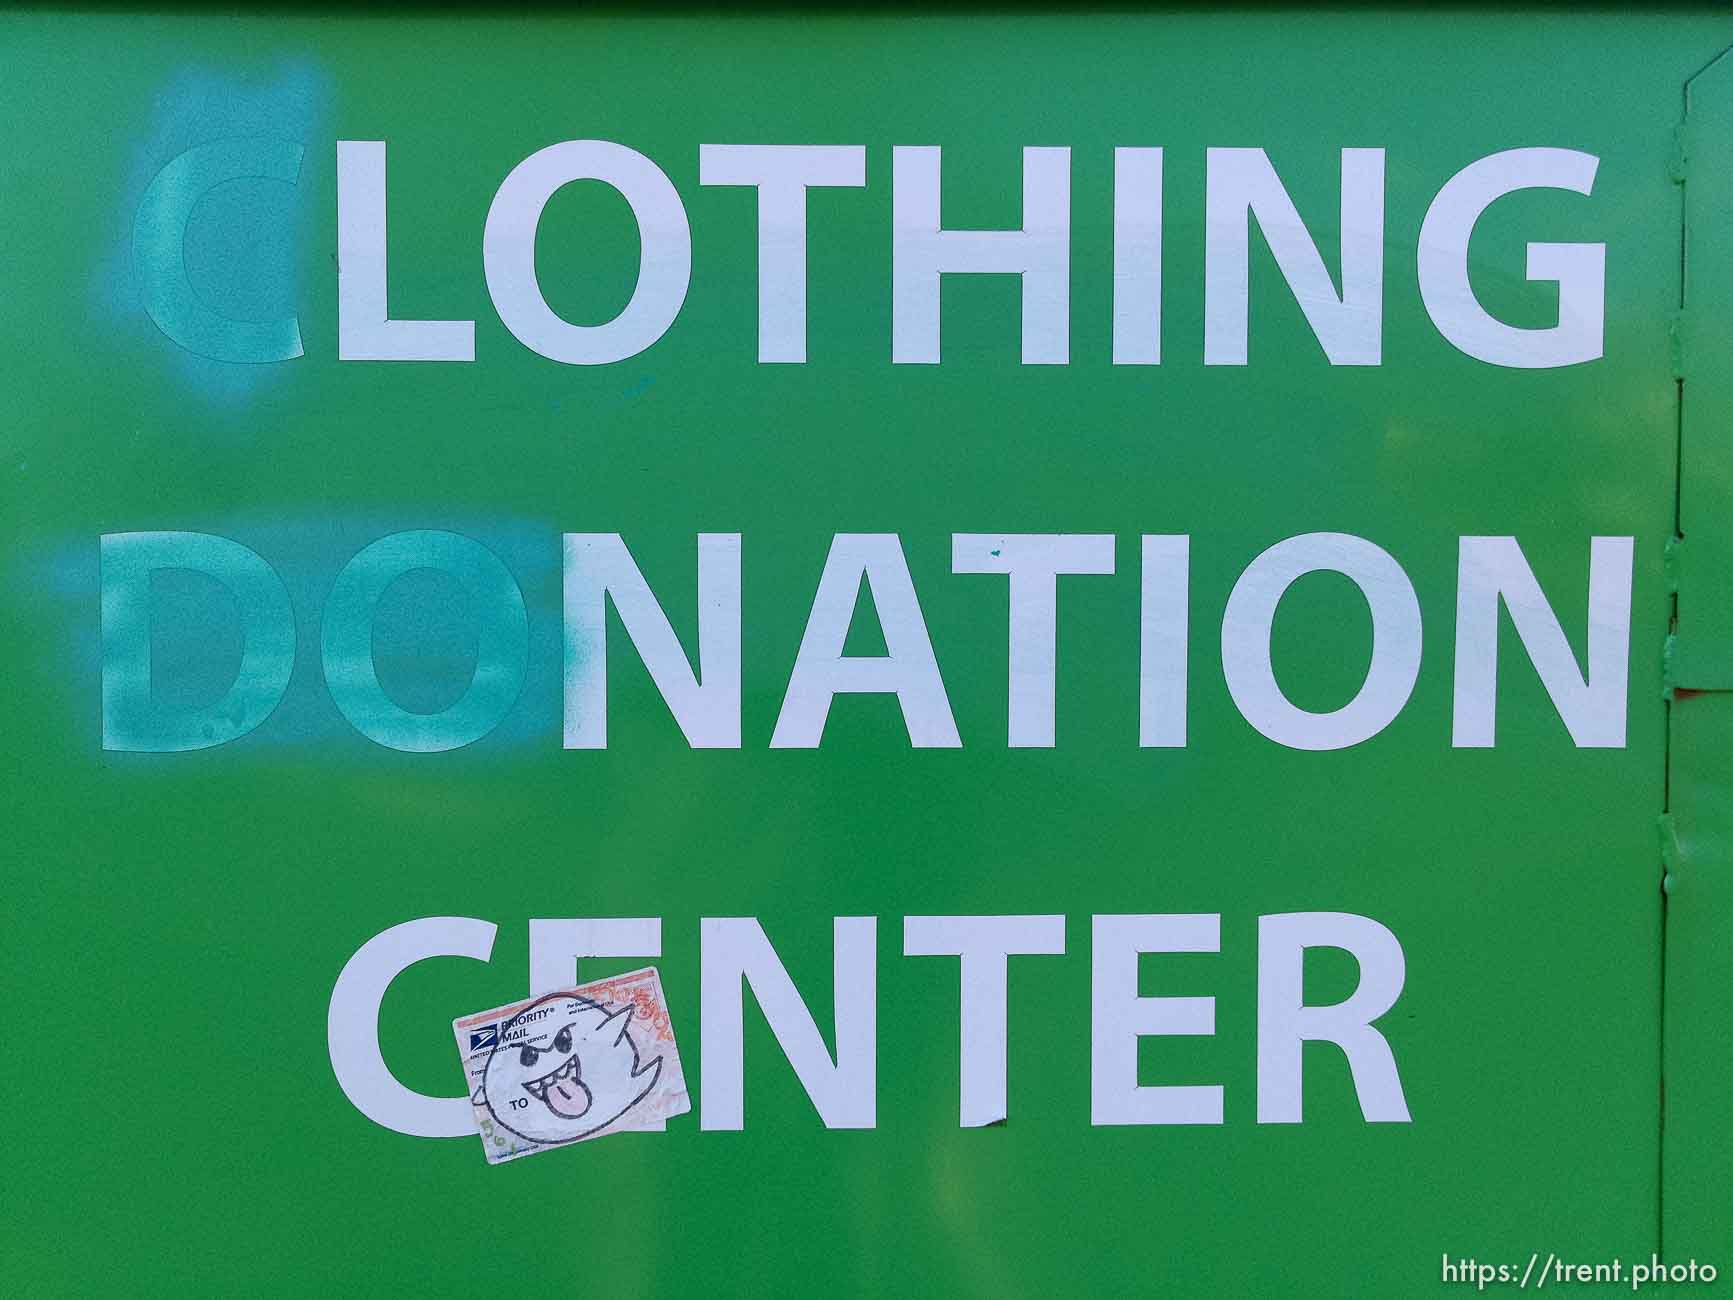 lothing nation center